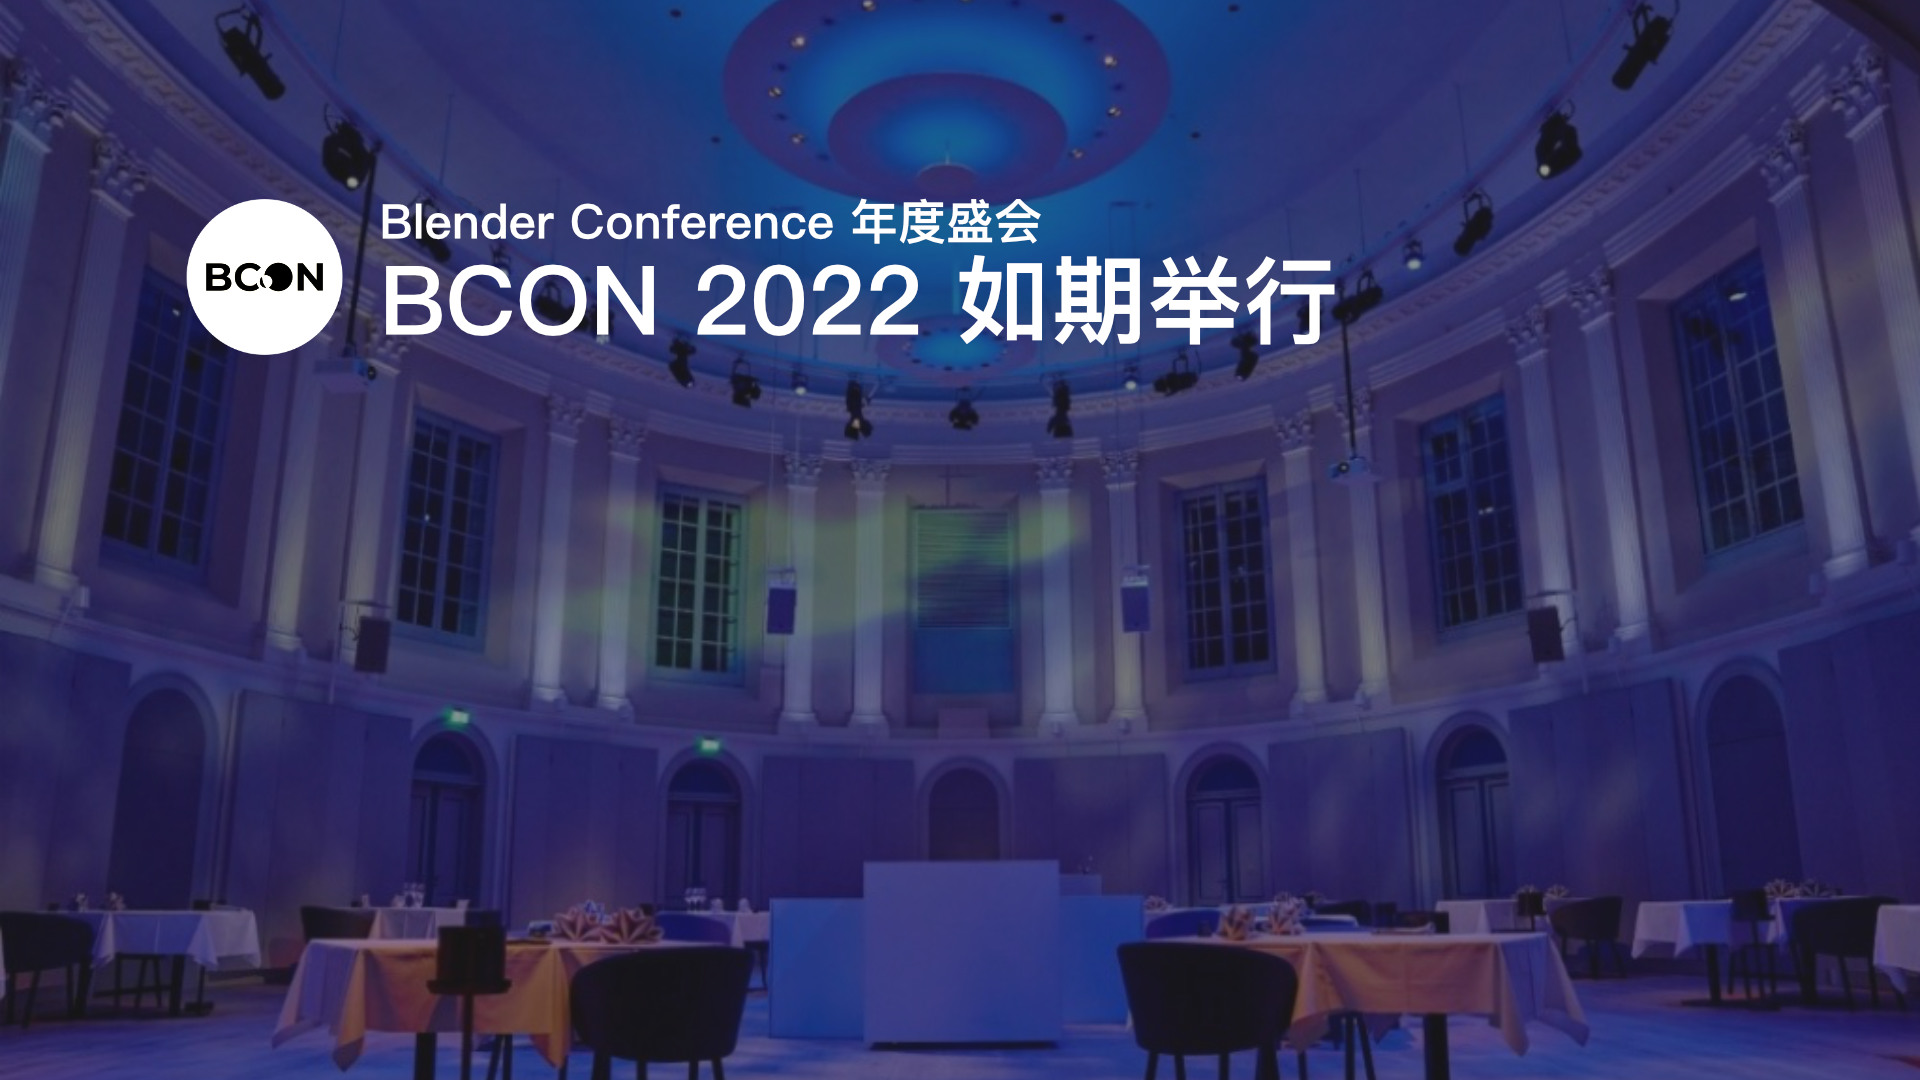 BCON 2022 如期举行.jpg